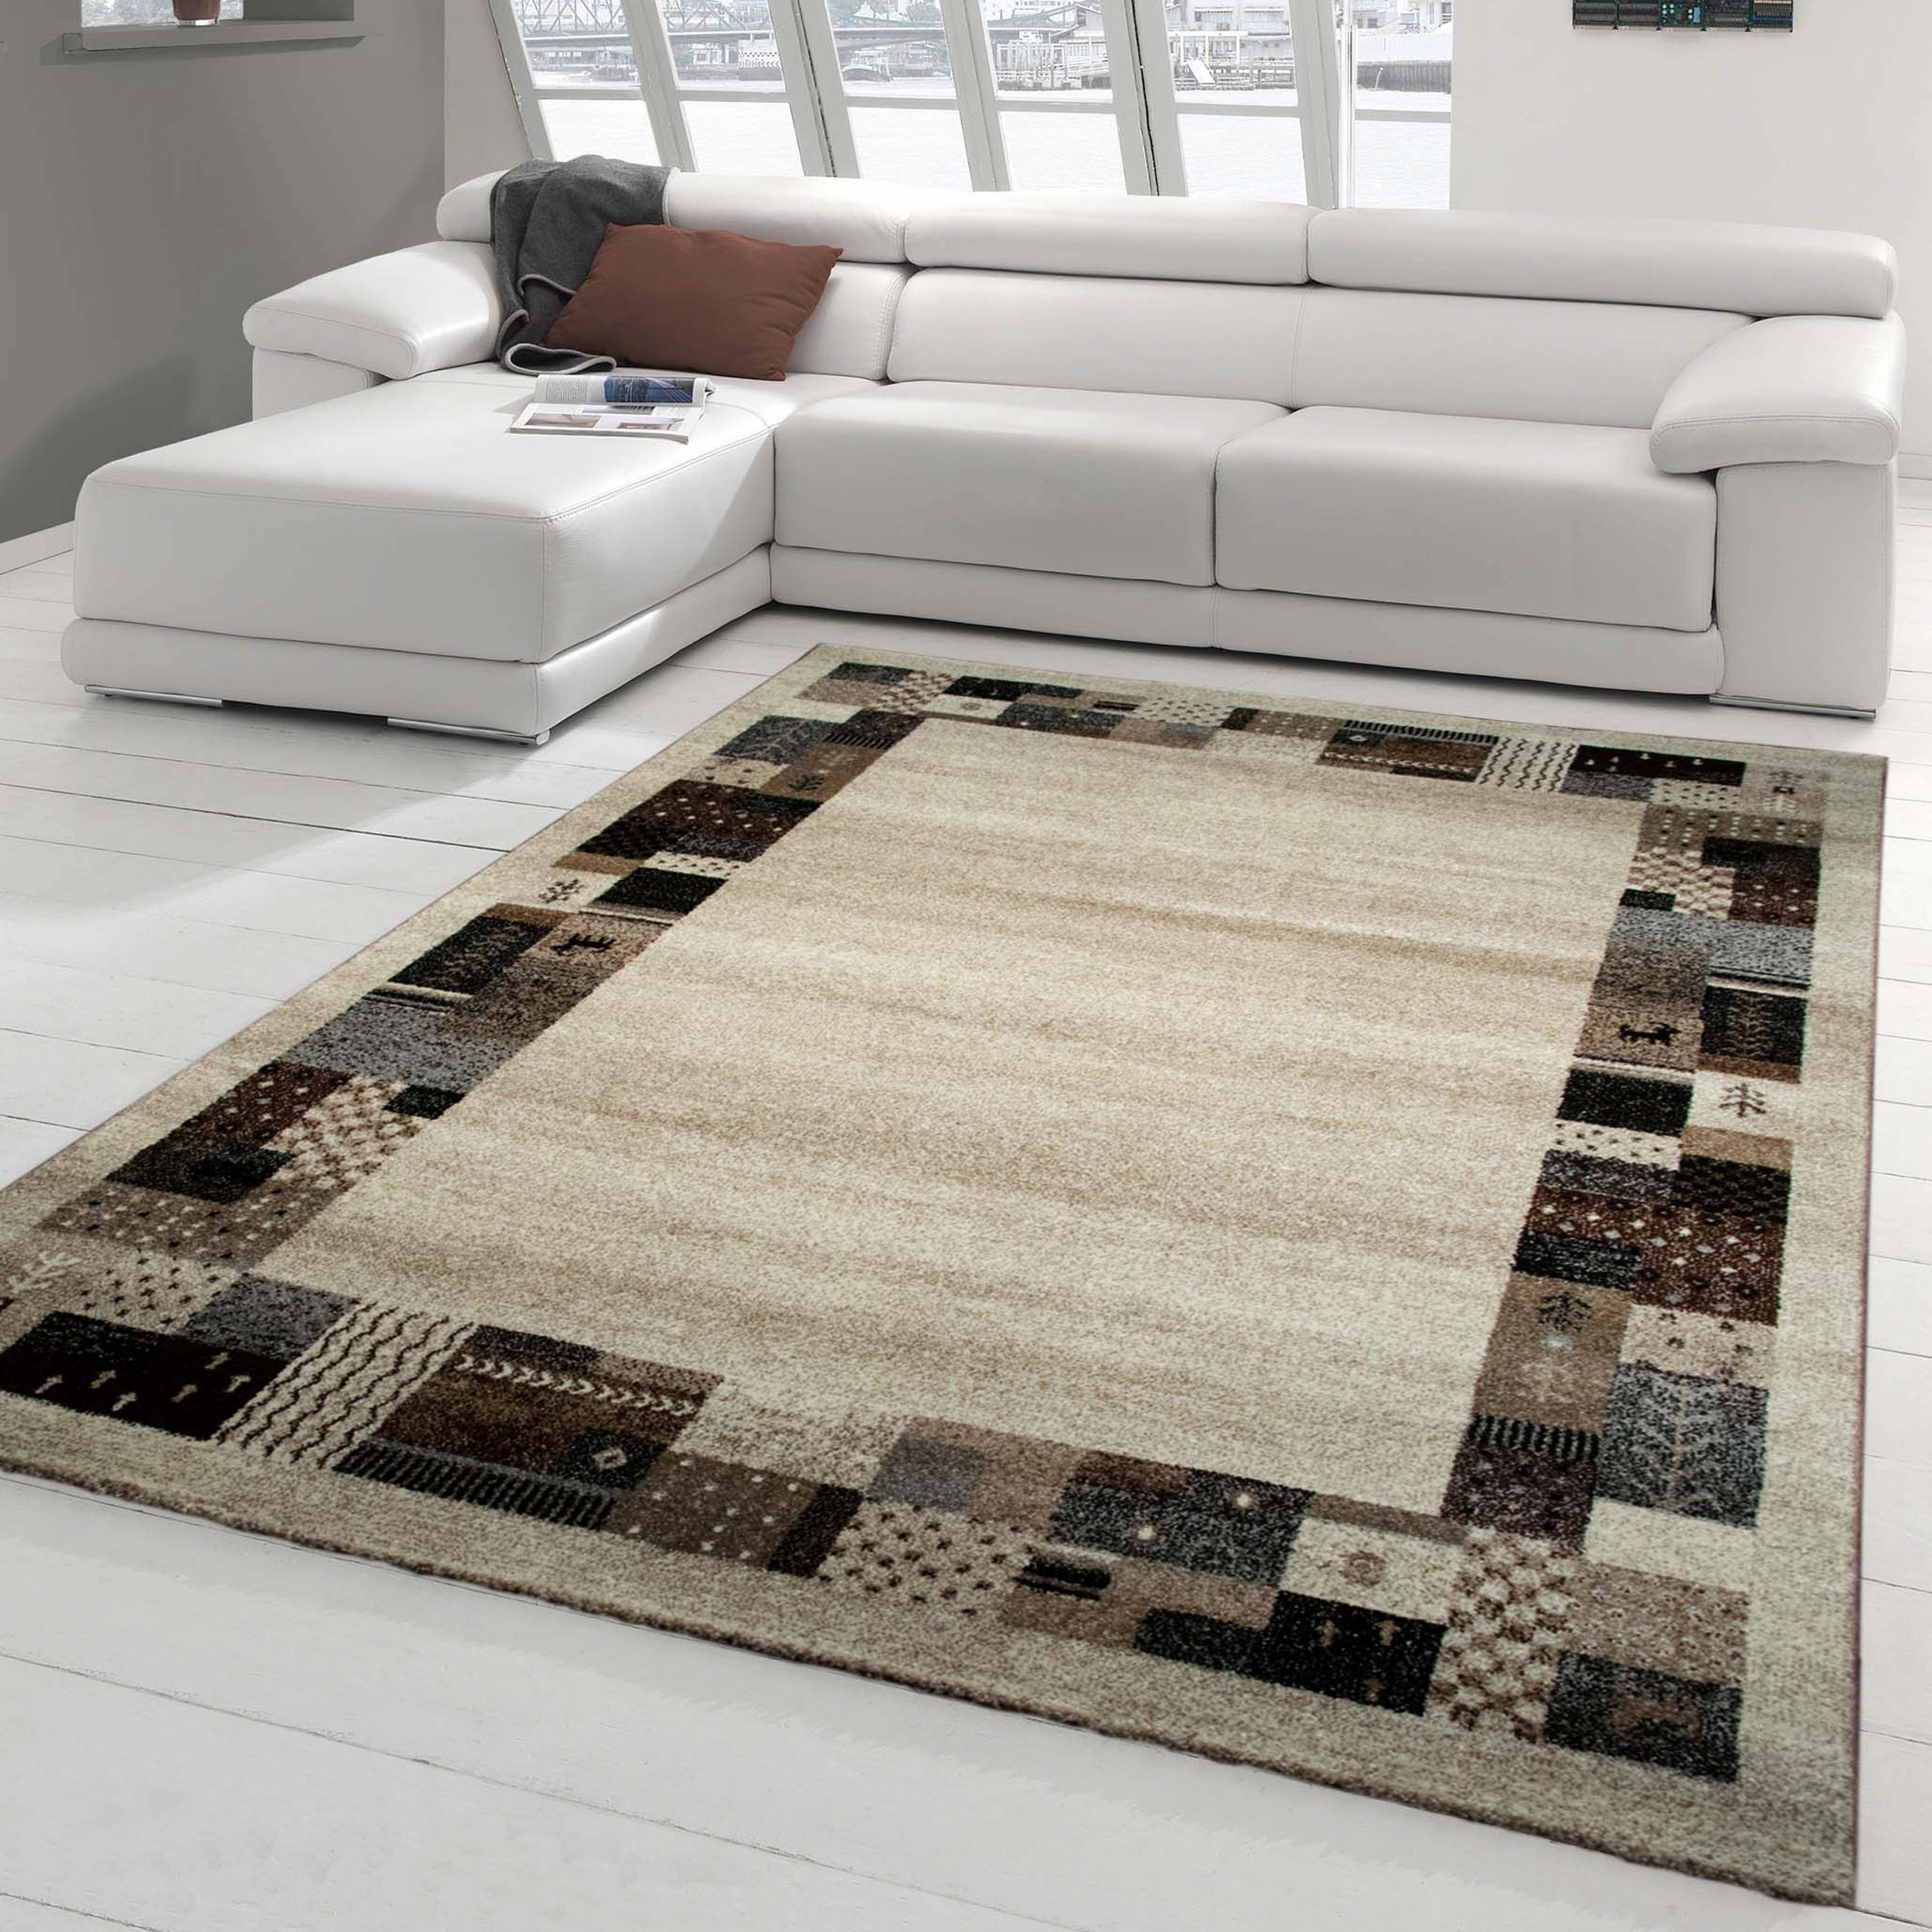 Modern & designer -Traum dreams High-quality cheap - carpet at and carpets: Teppich